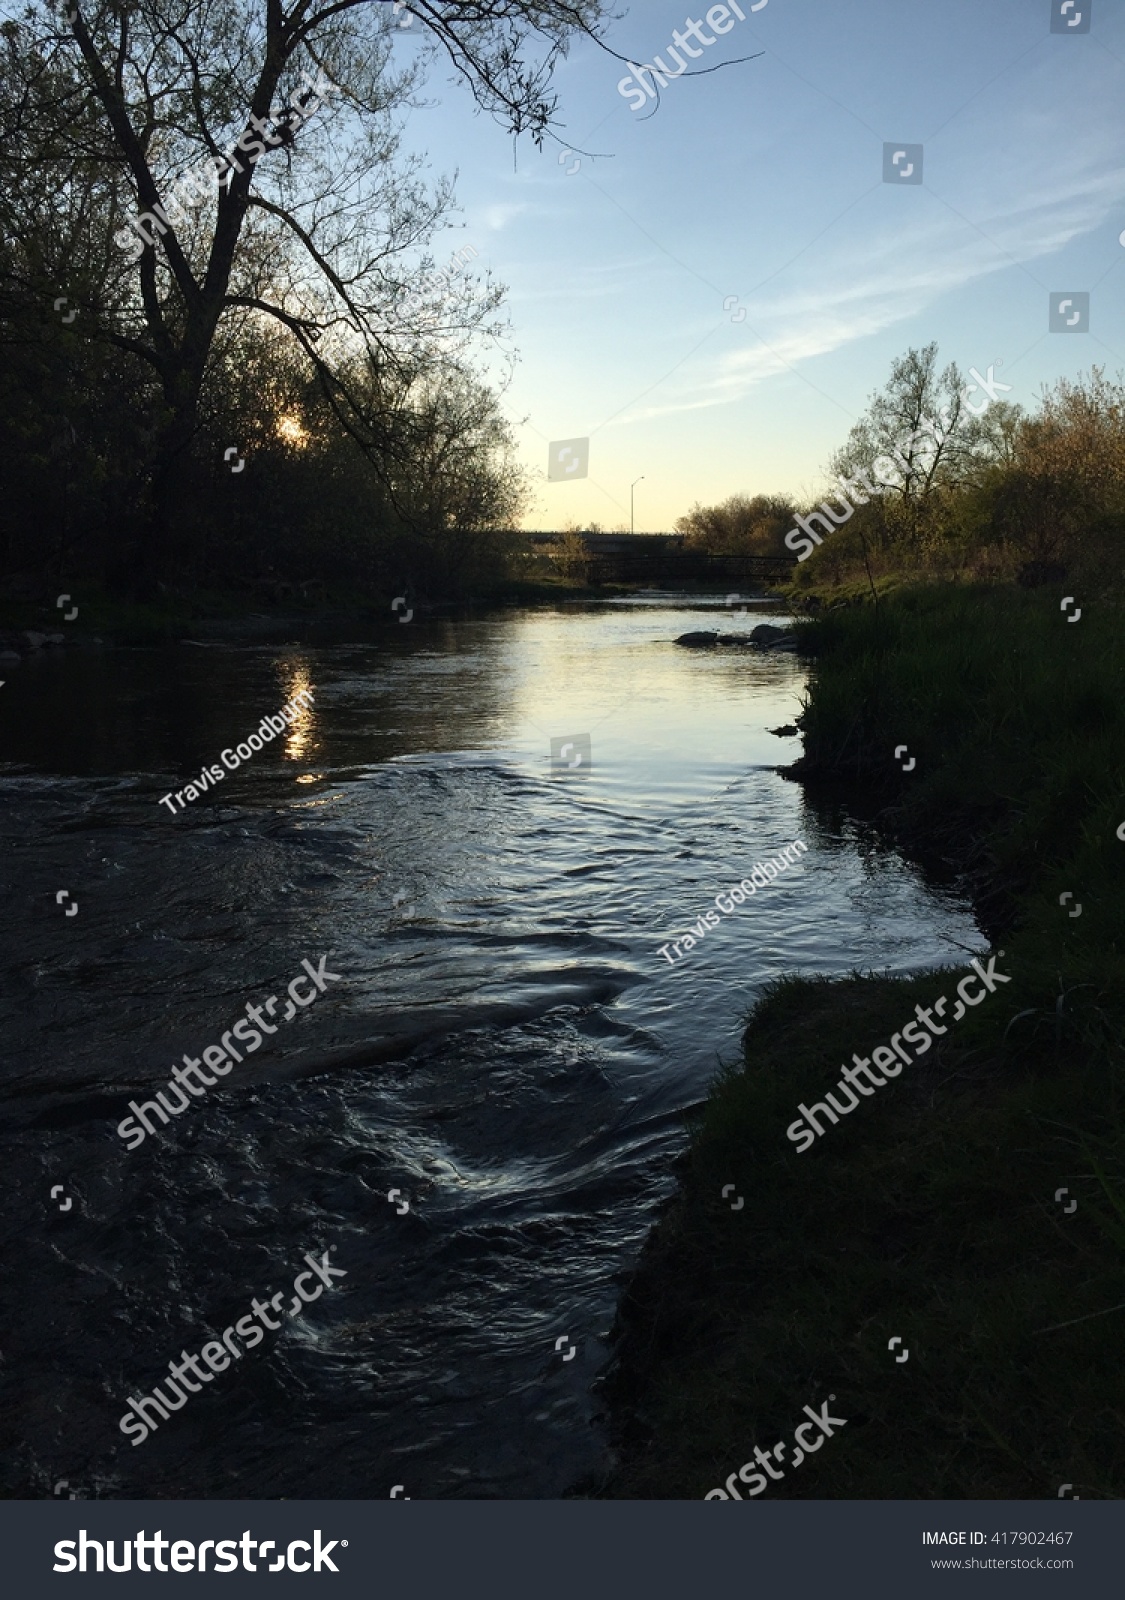 Humber river - Calm river #417902467